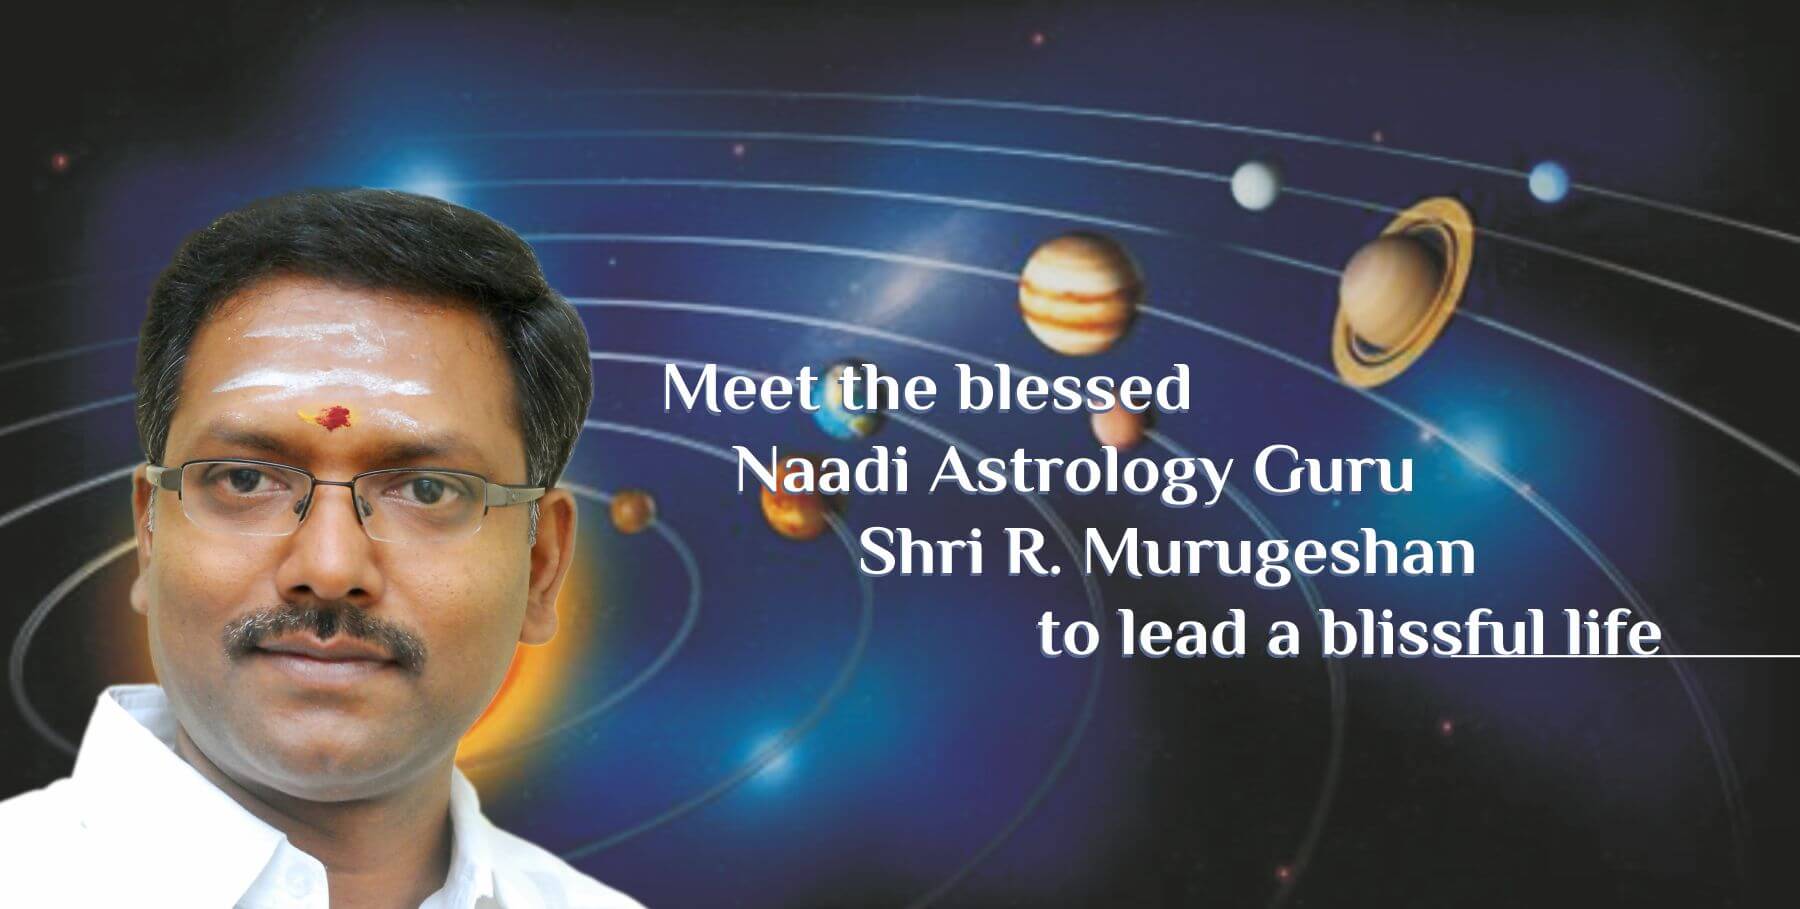 Meet the blessed Naadi Astrology Guru Shri R. Murugeshan to lead a blissful life